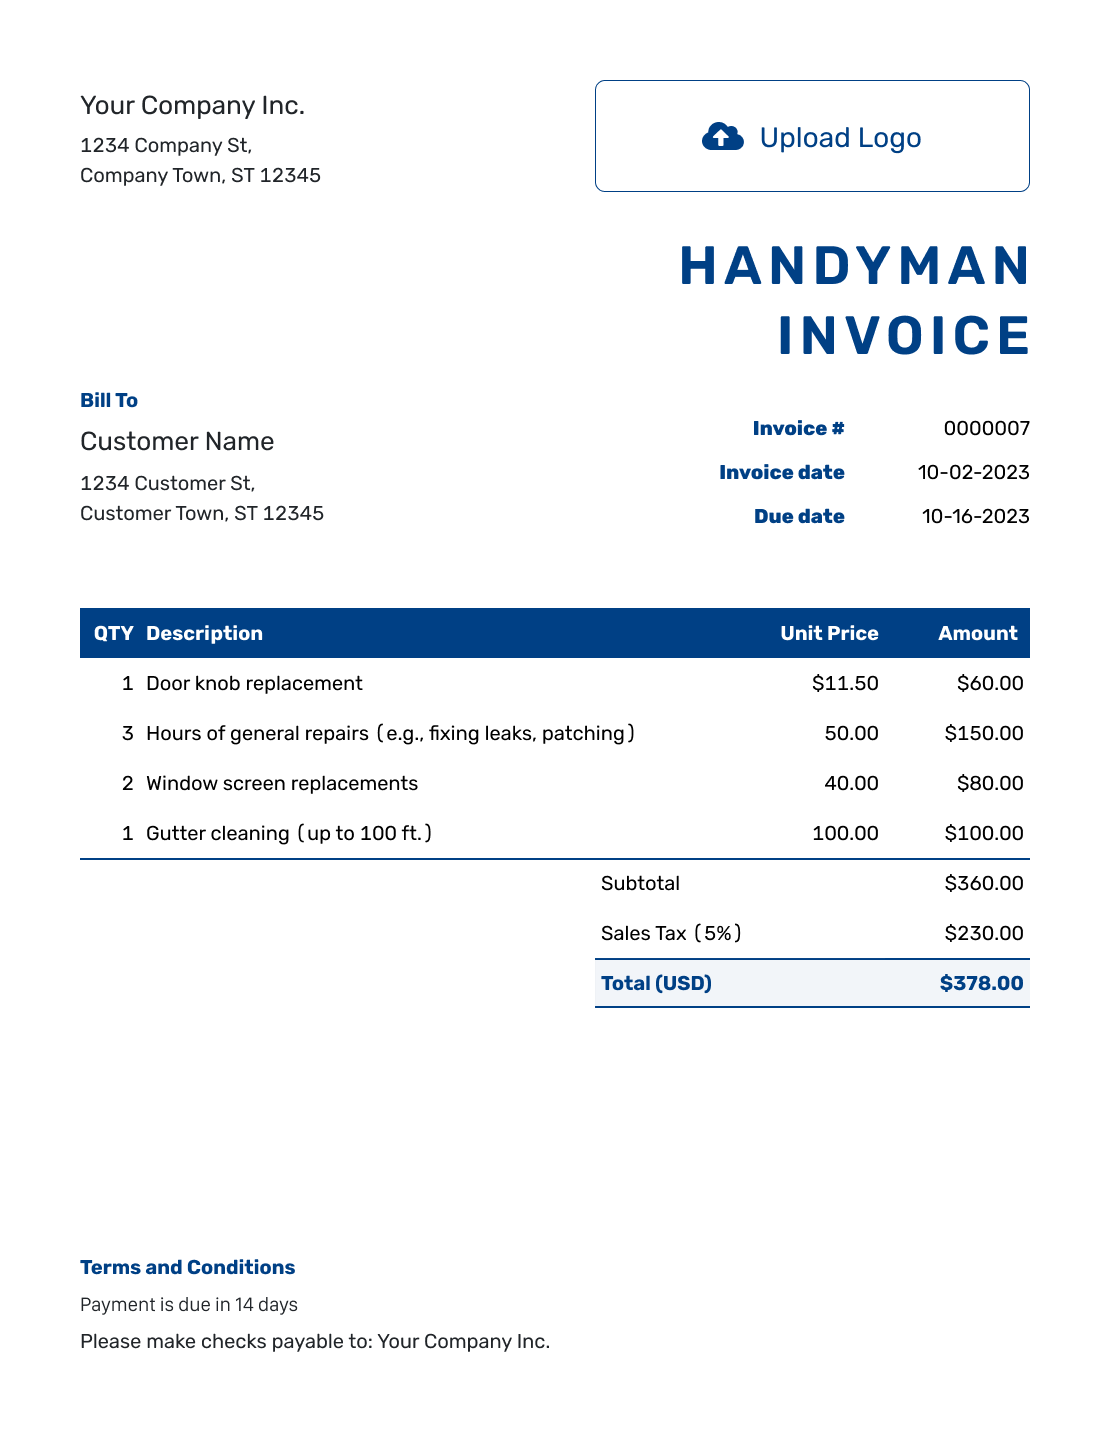 Sample Handyman Invoice Template